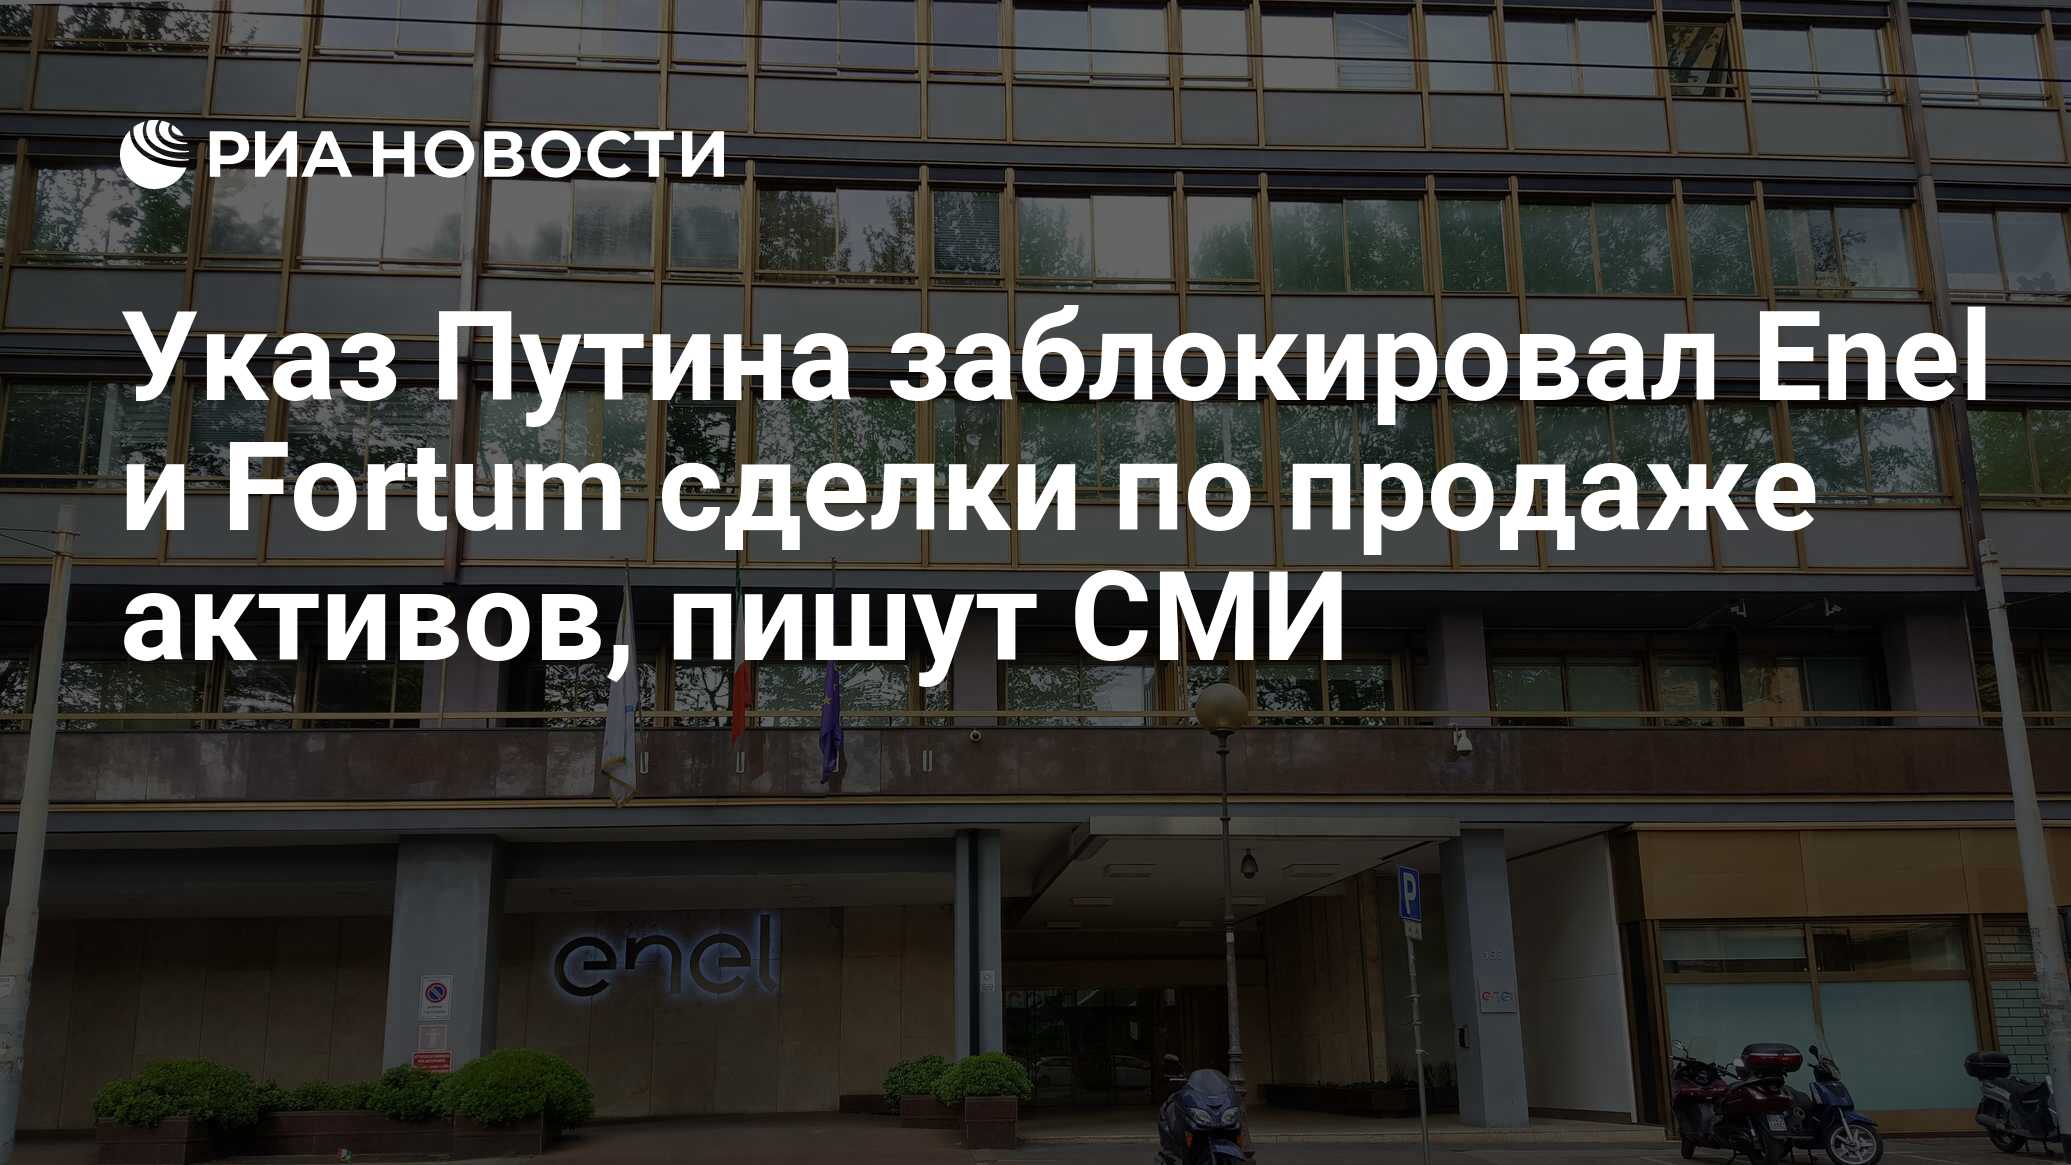 Putin’s decree blocks Enel and Fortum asset sale offers, media write